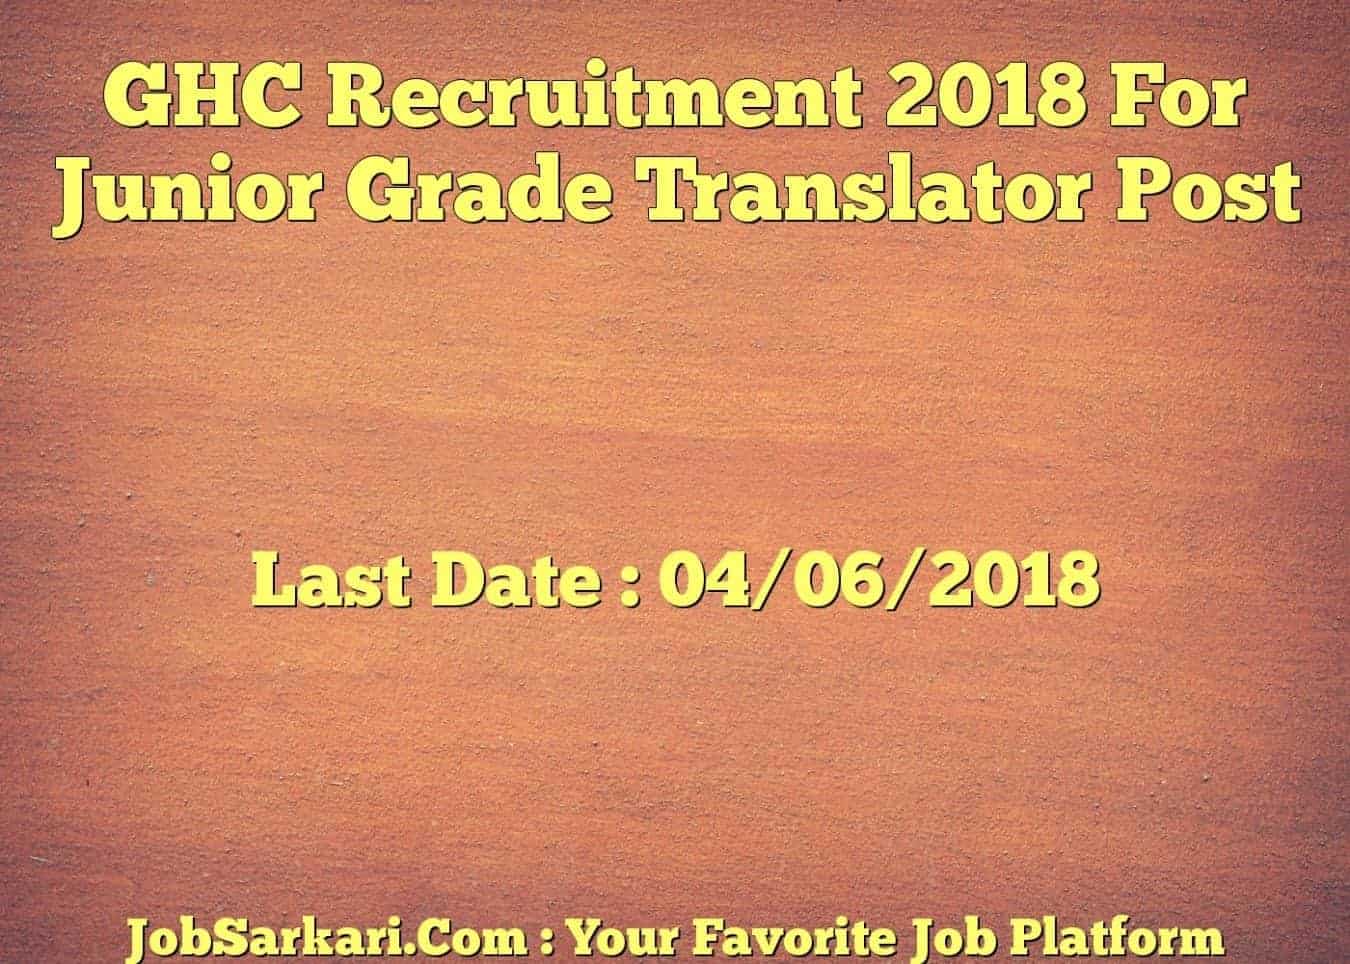 GHC Recruitment 2018 For Junior Grade Translator Post